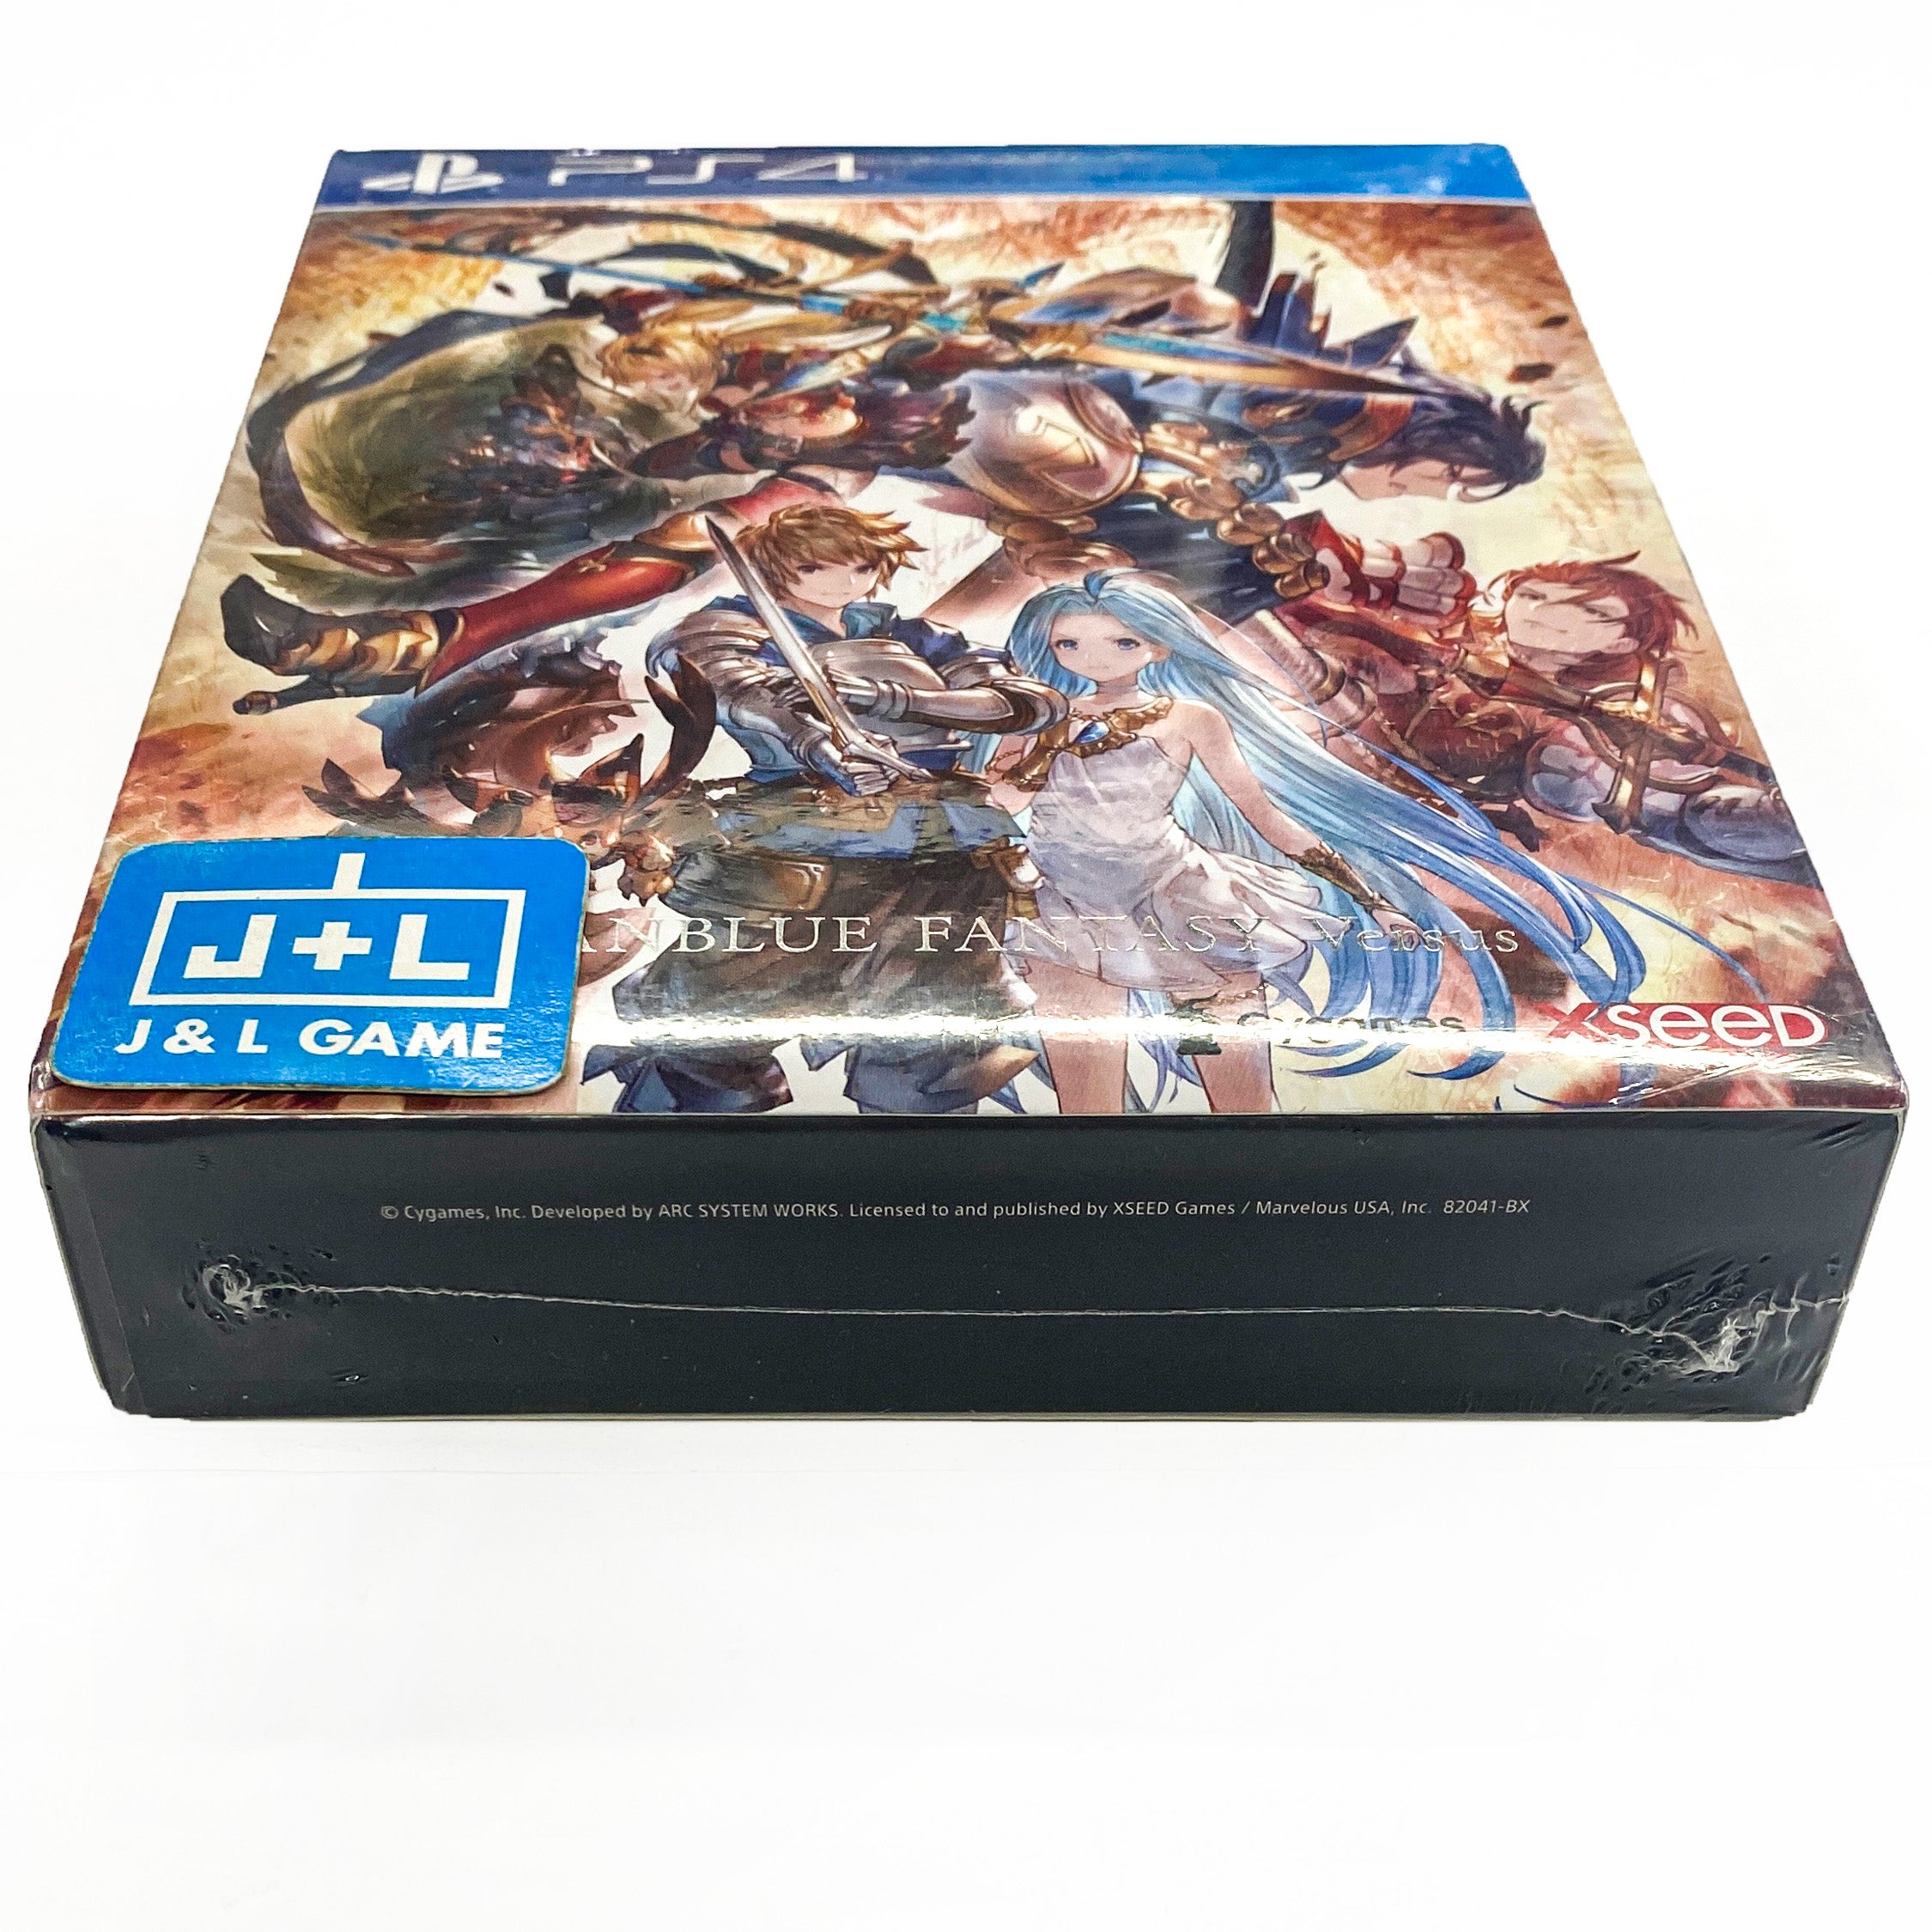 Granblue Fantasy: Versus - Premium Edition - (PS4) PlayStation 4 Video Games XSEED Games   